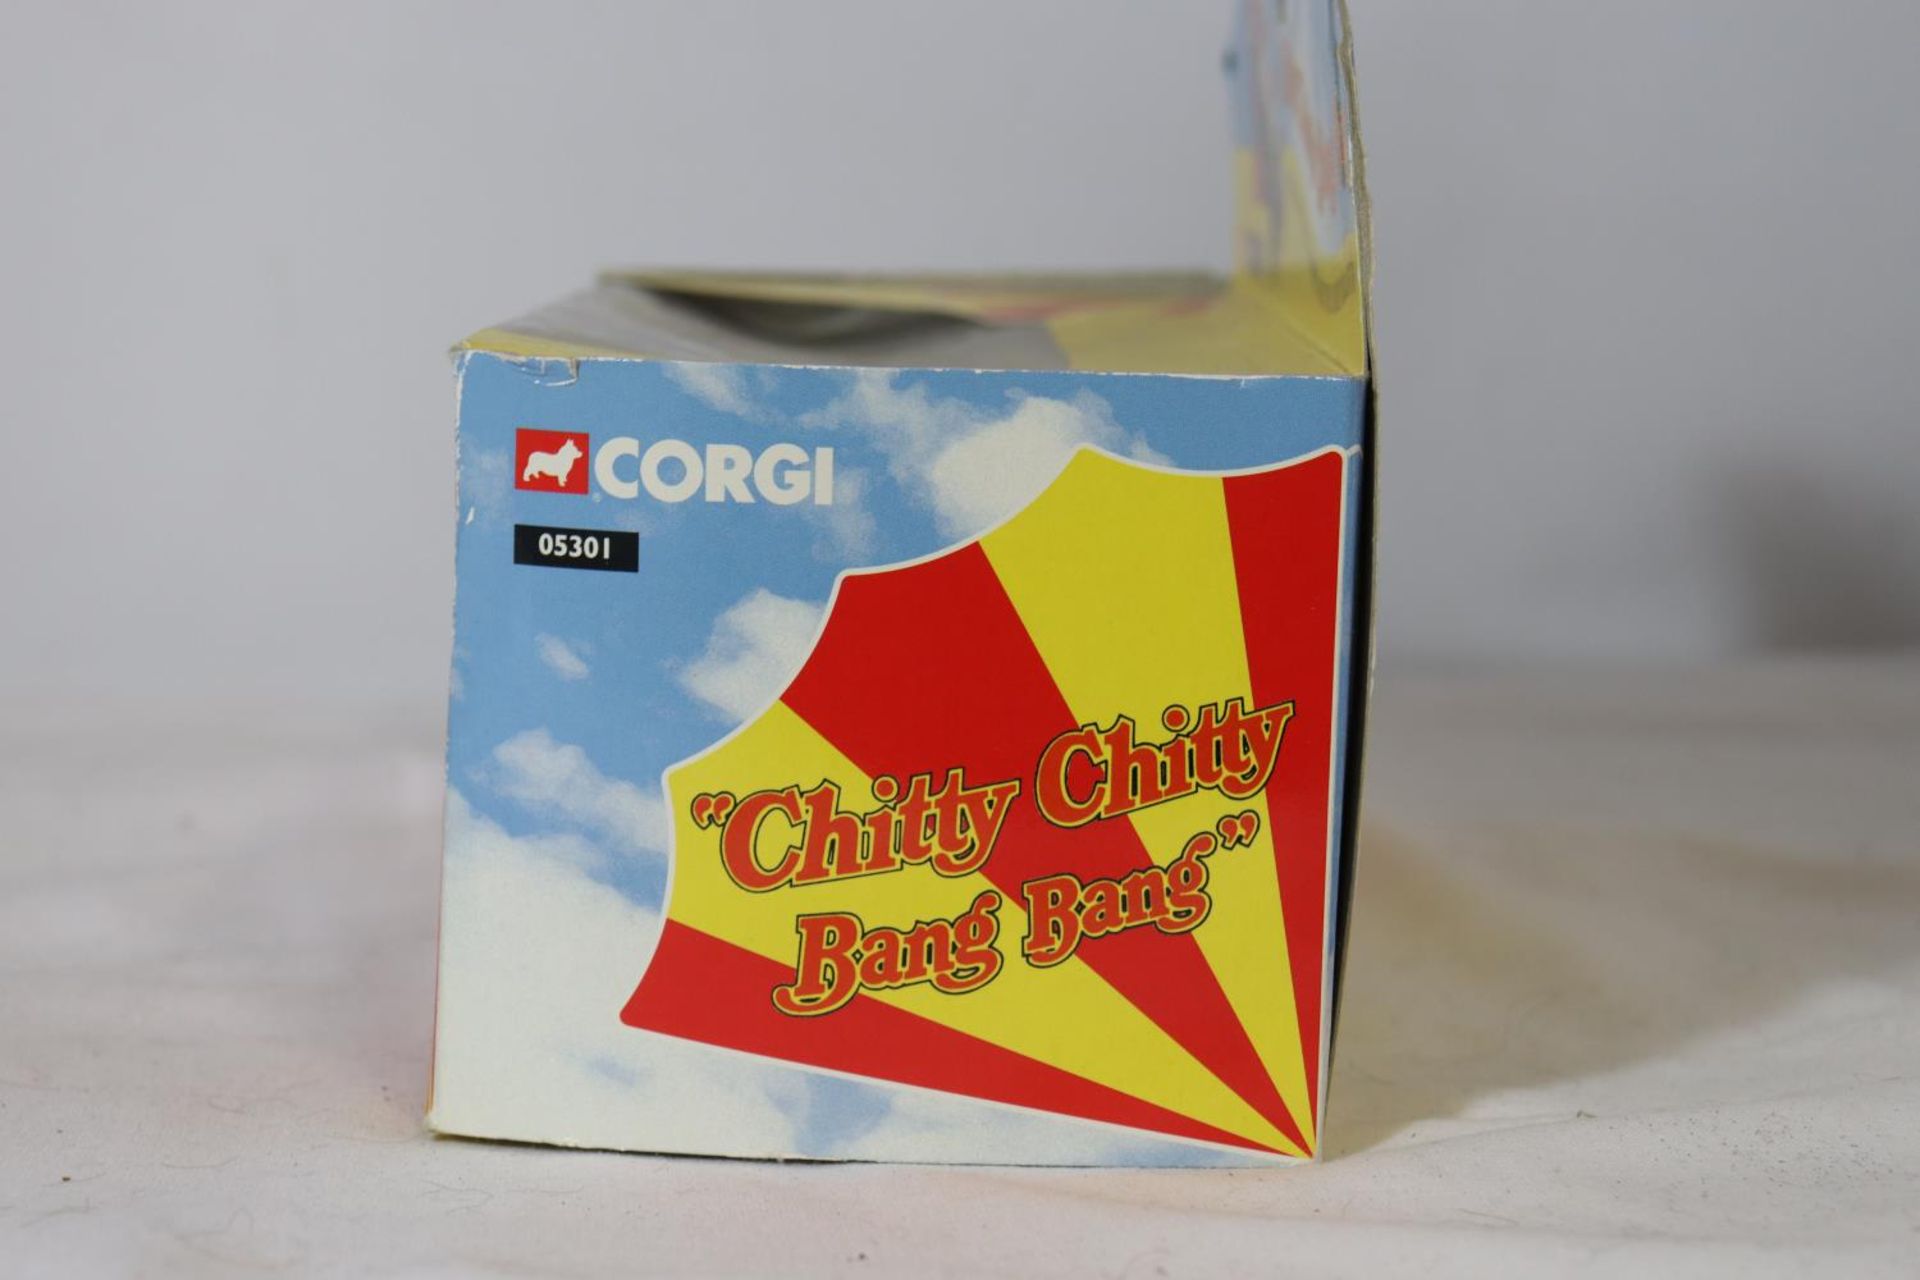 A CORGI DETAILED SCALE MODEL OF CHITTY CHITTY BANG BANG - Image 3 of 4